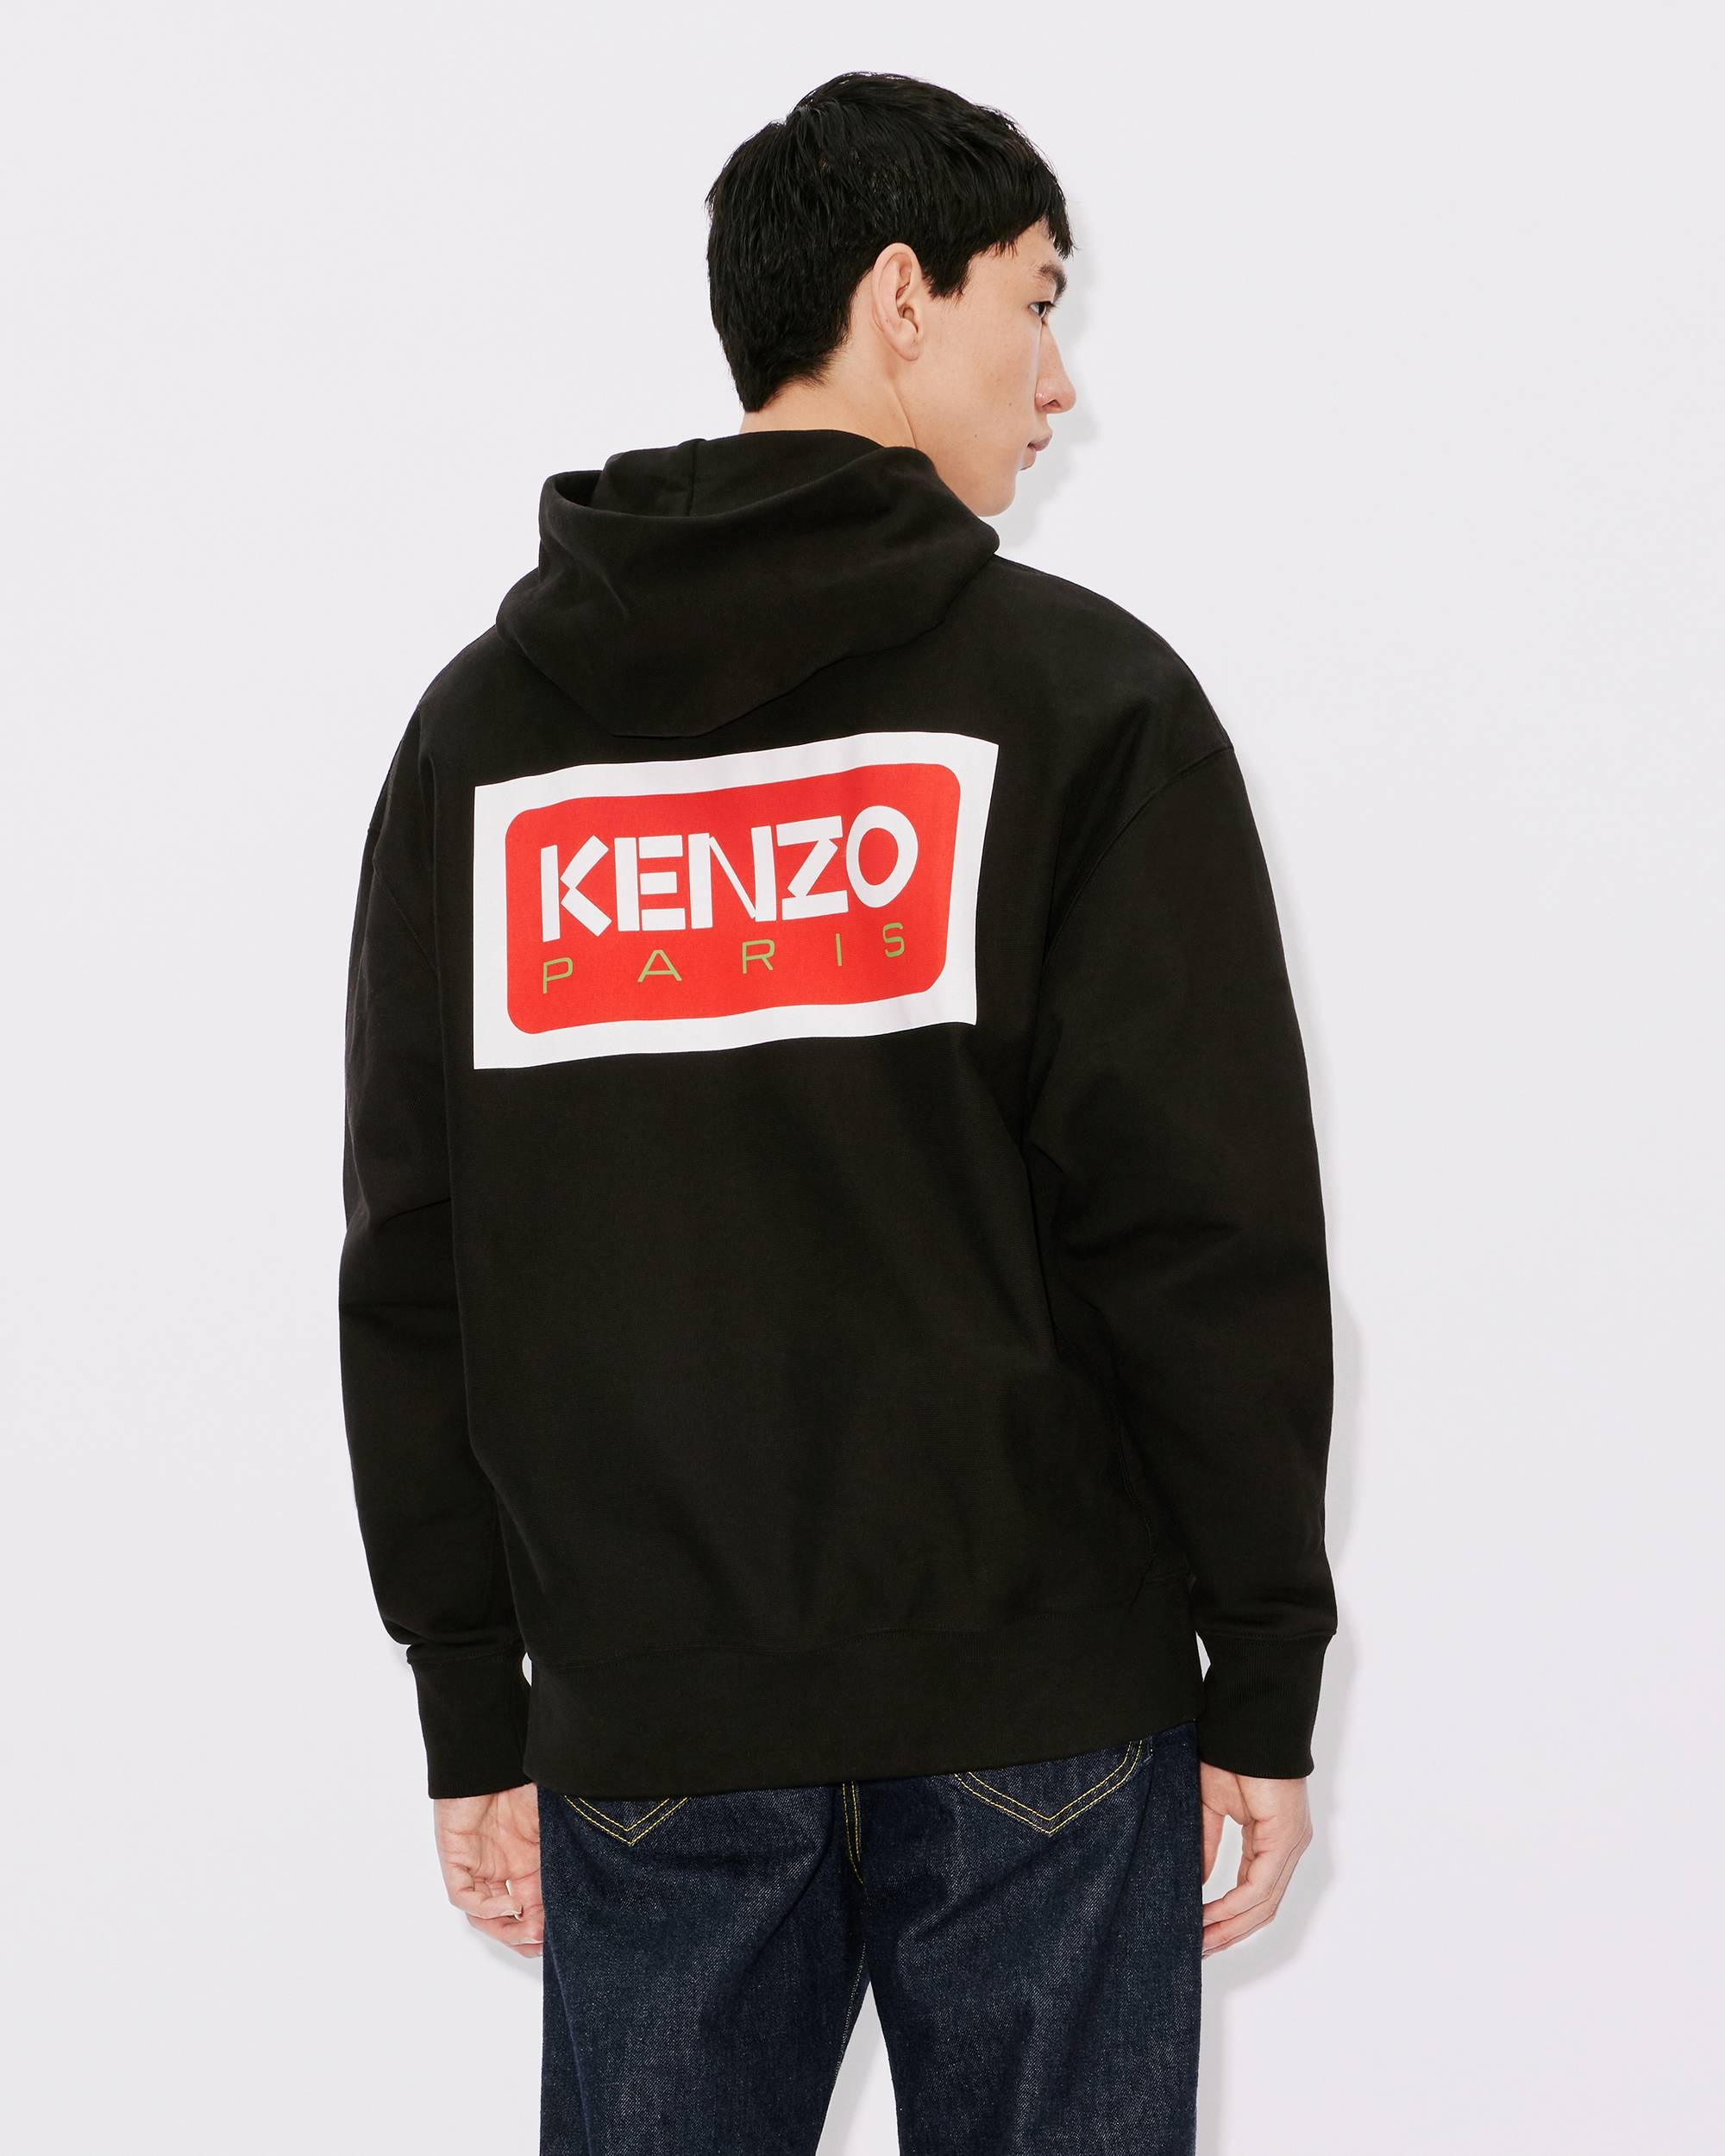 Oversize hooded KENZO Paris sweatshirt - 4